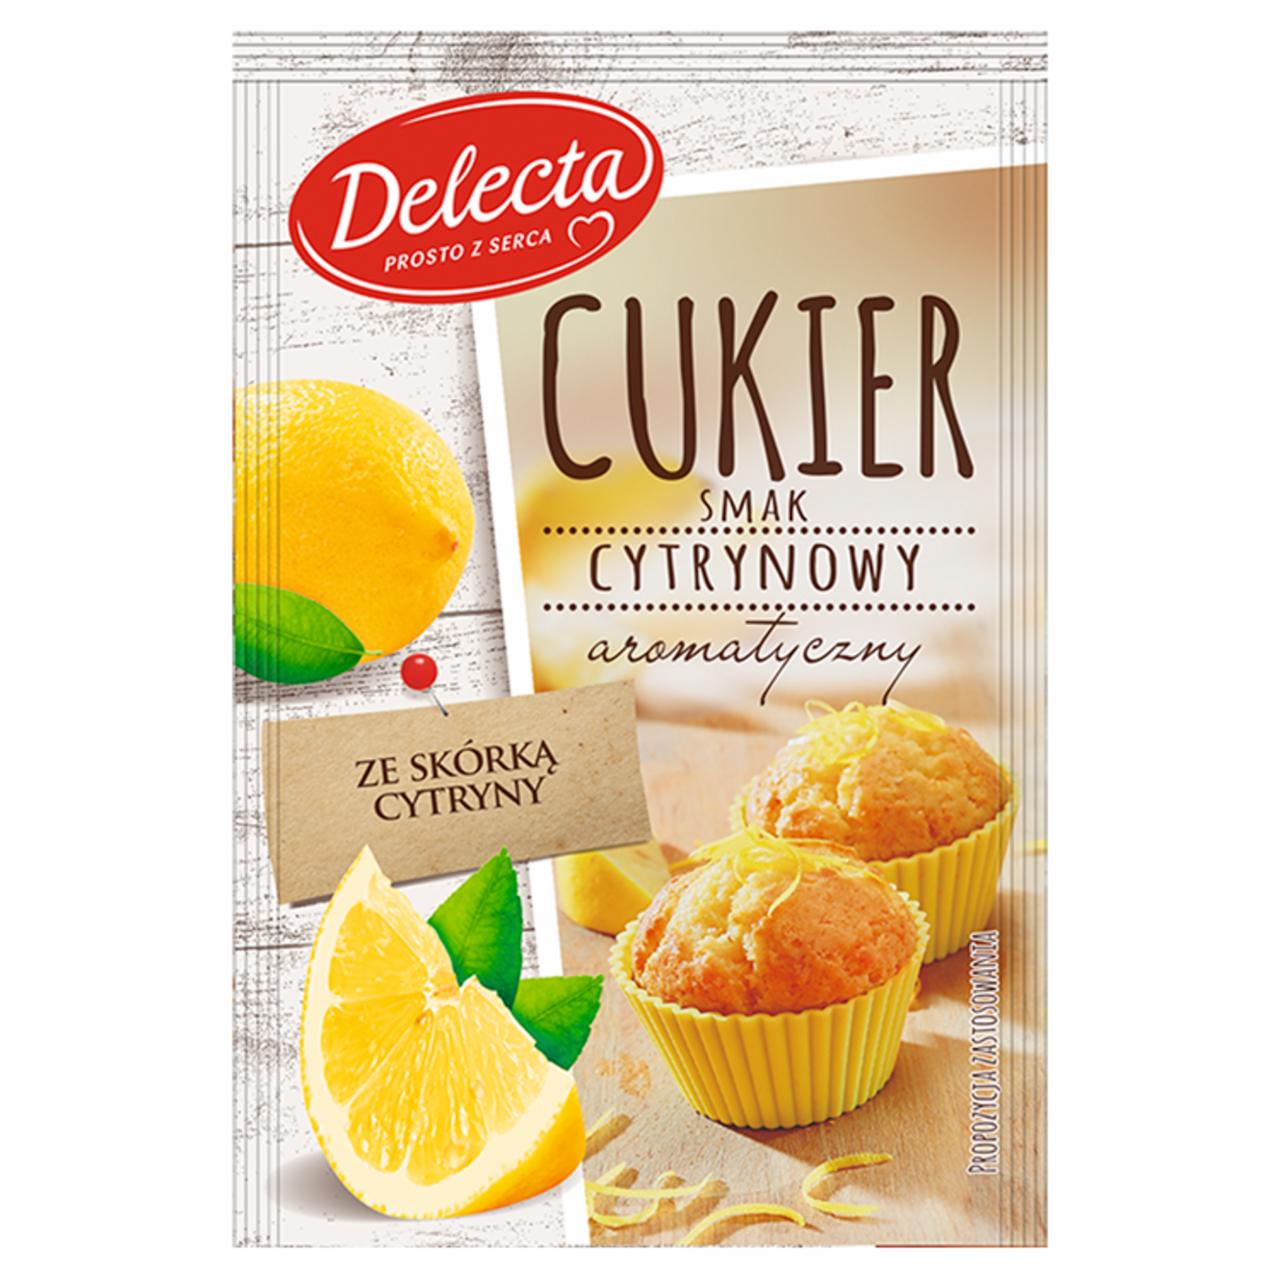 Zdjęcia - Delecta Cukier smak cytrynowy 15 g